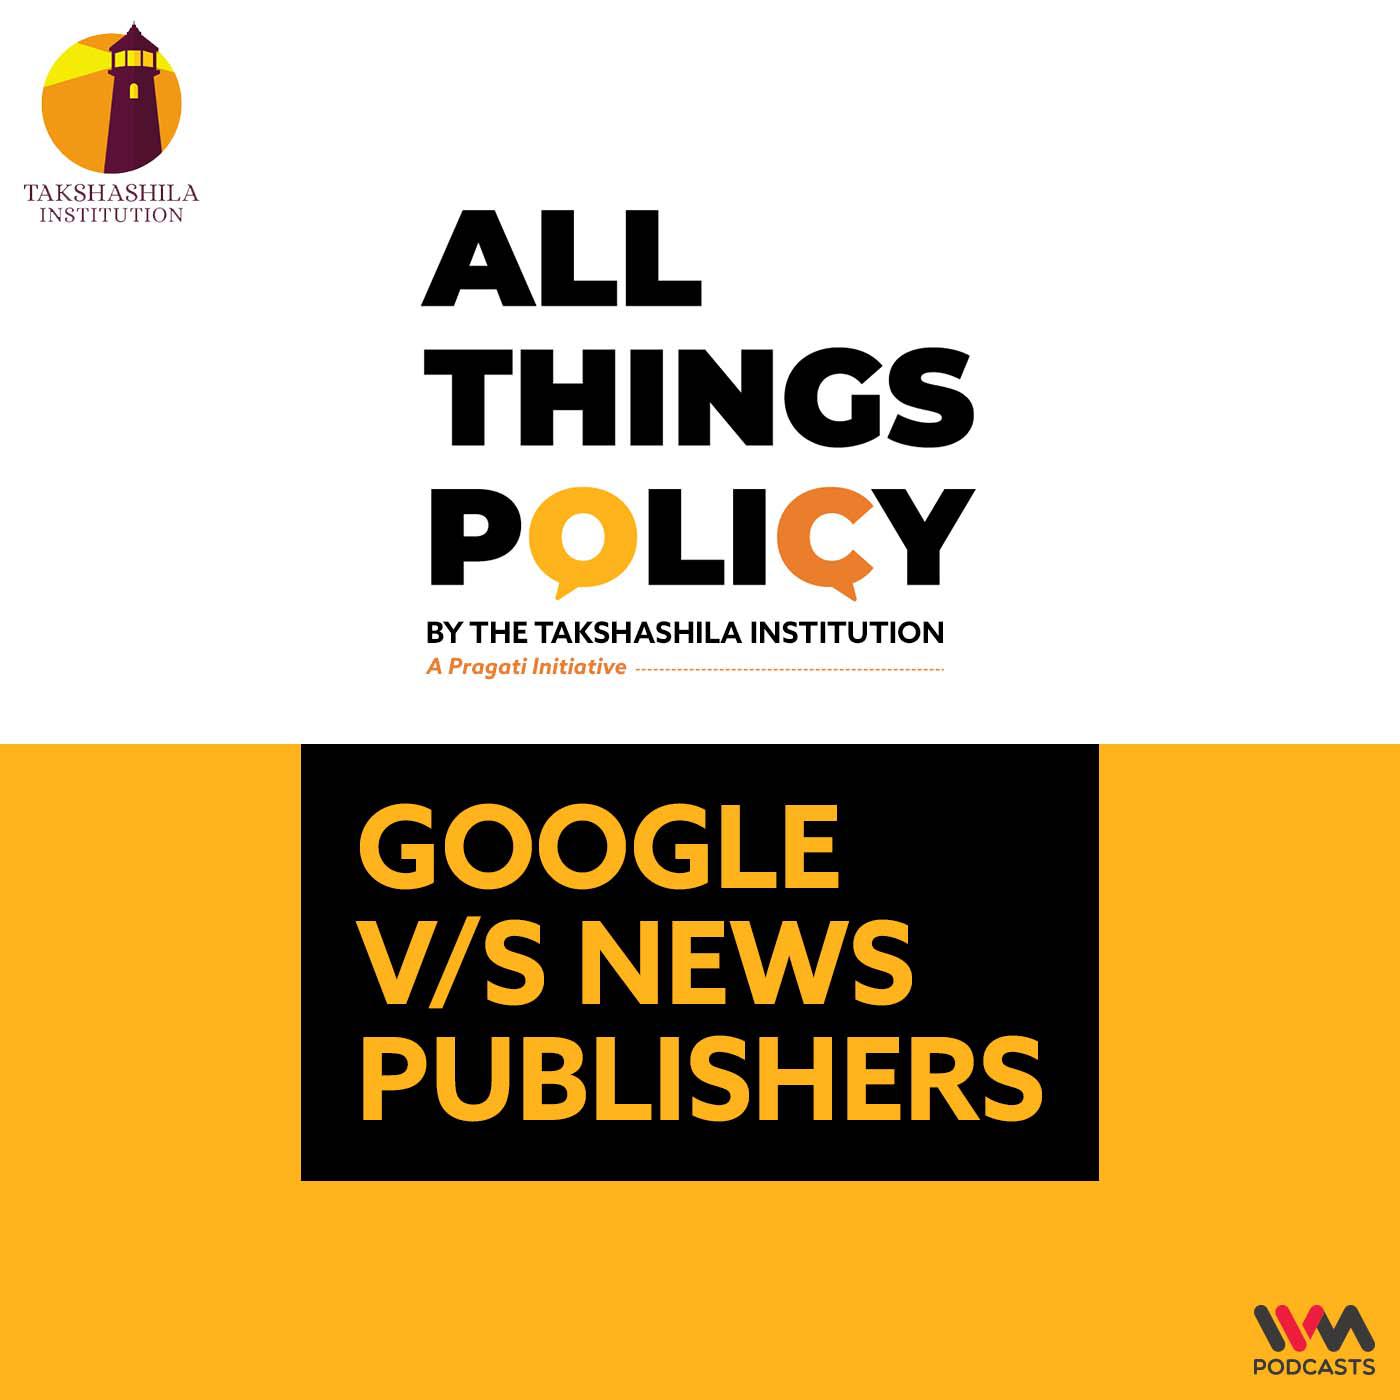 Google v/s News Publishers